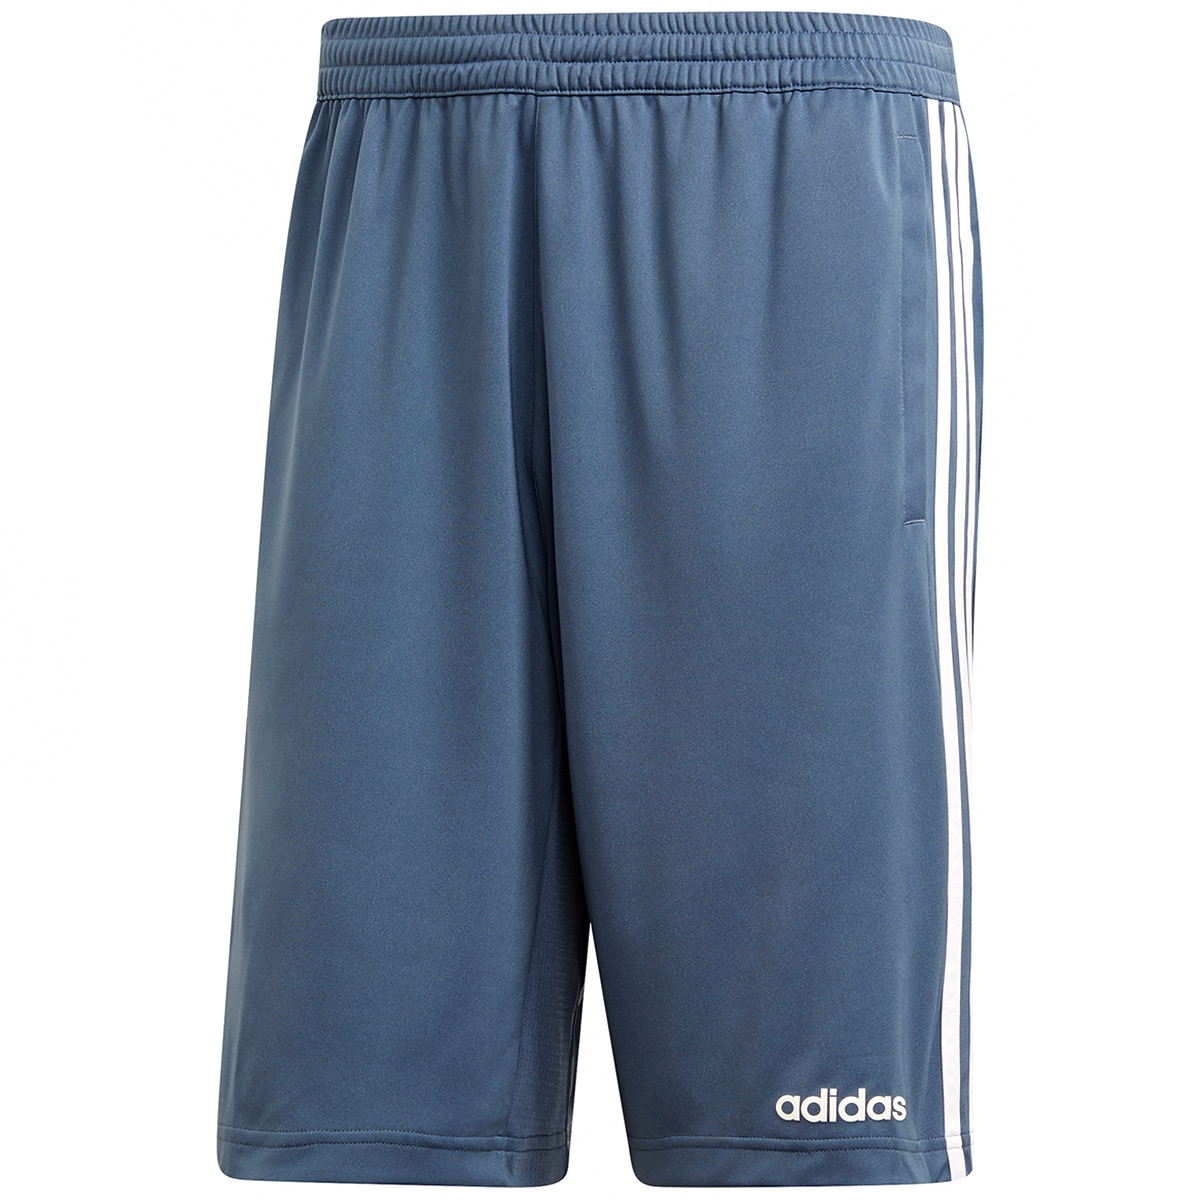 Adidas Shorts Active - Blue Stripe